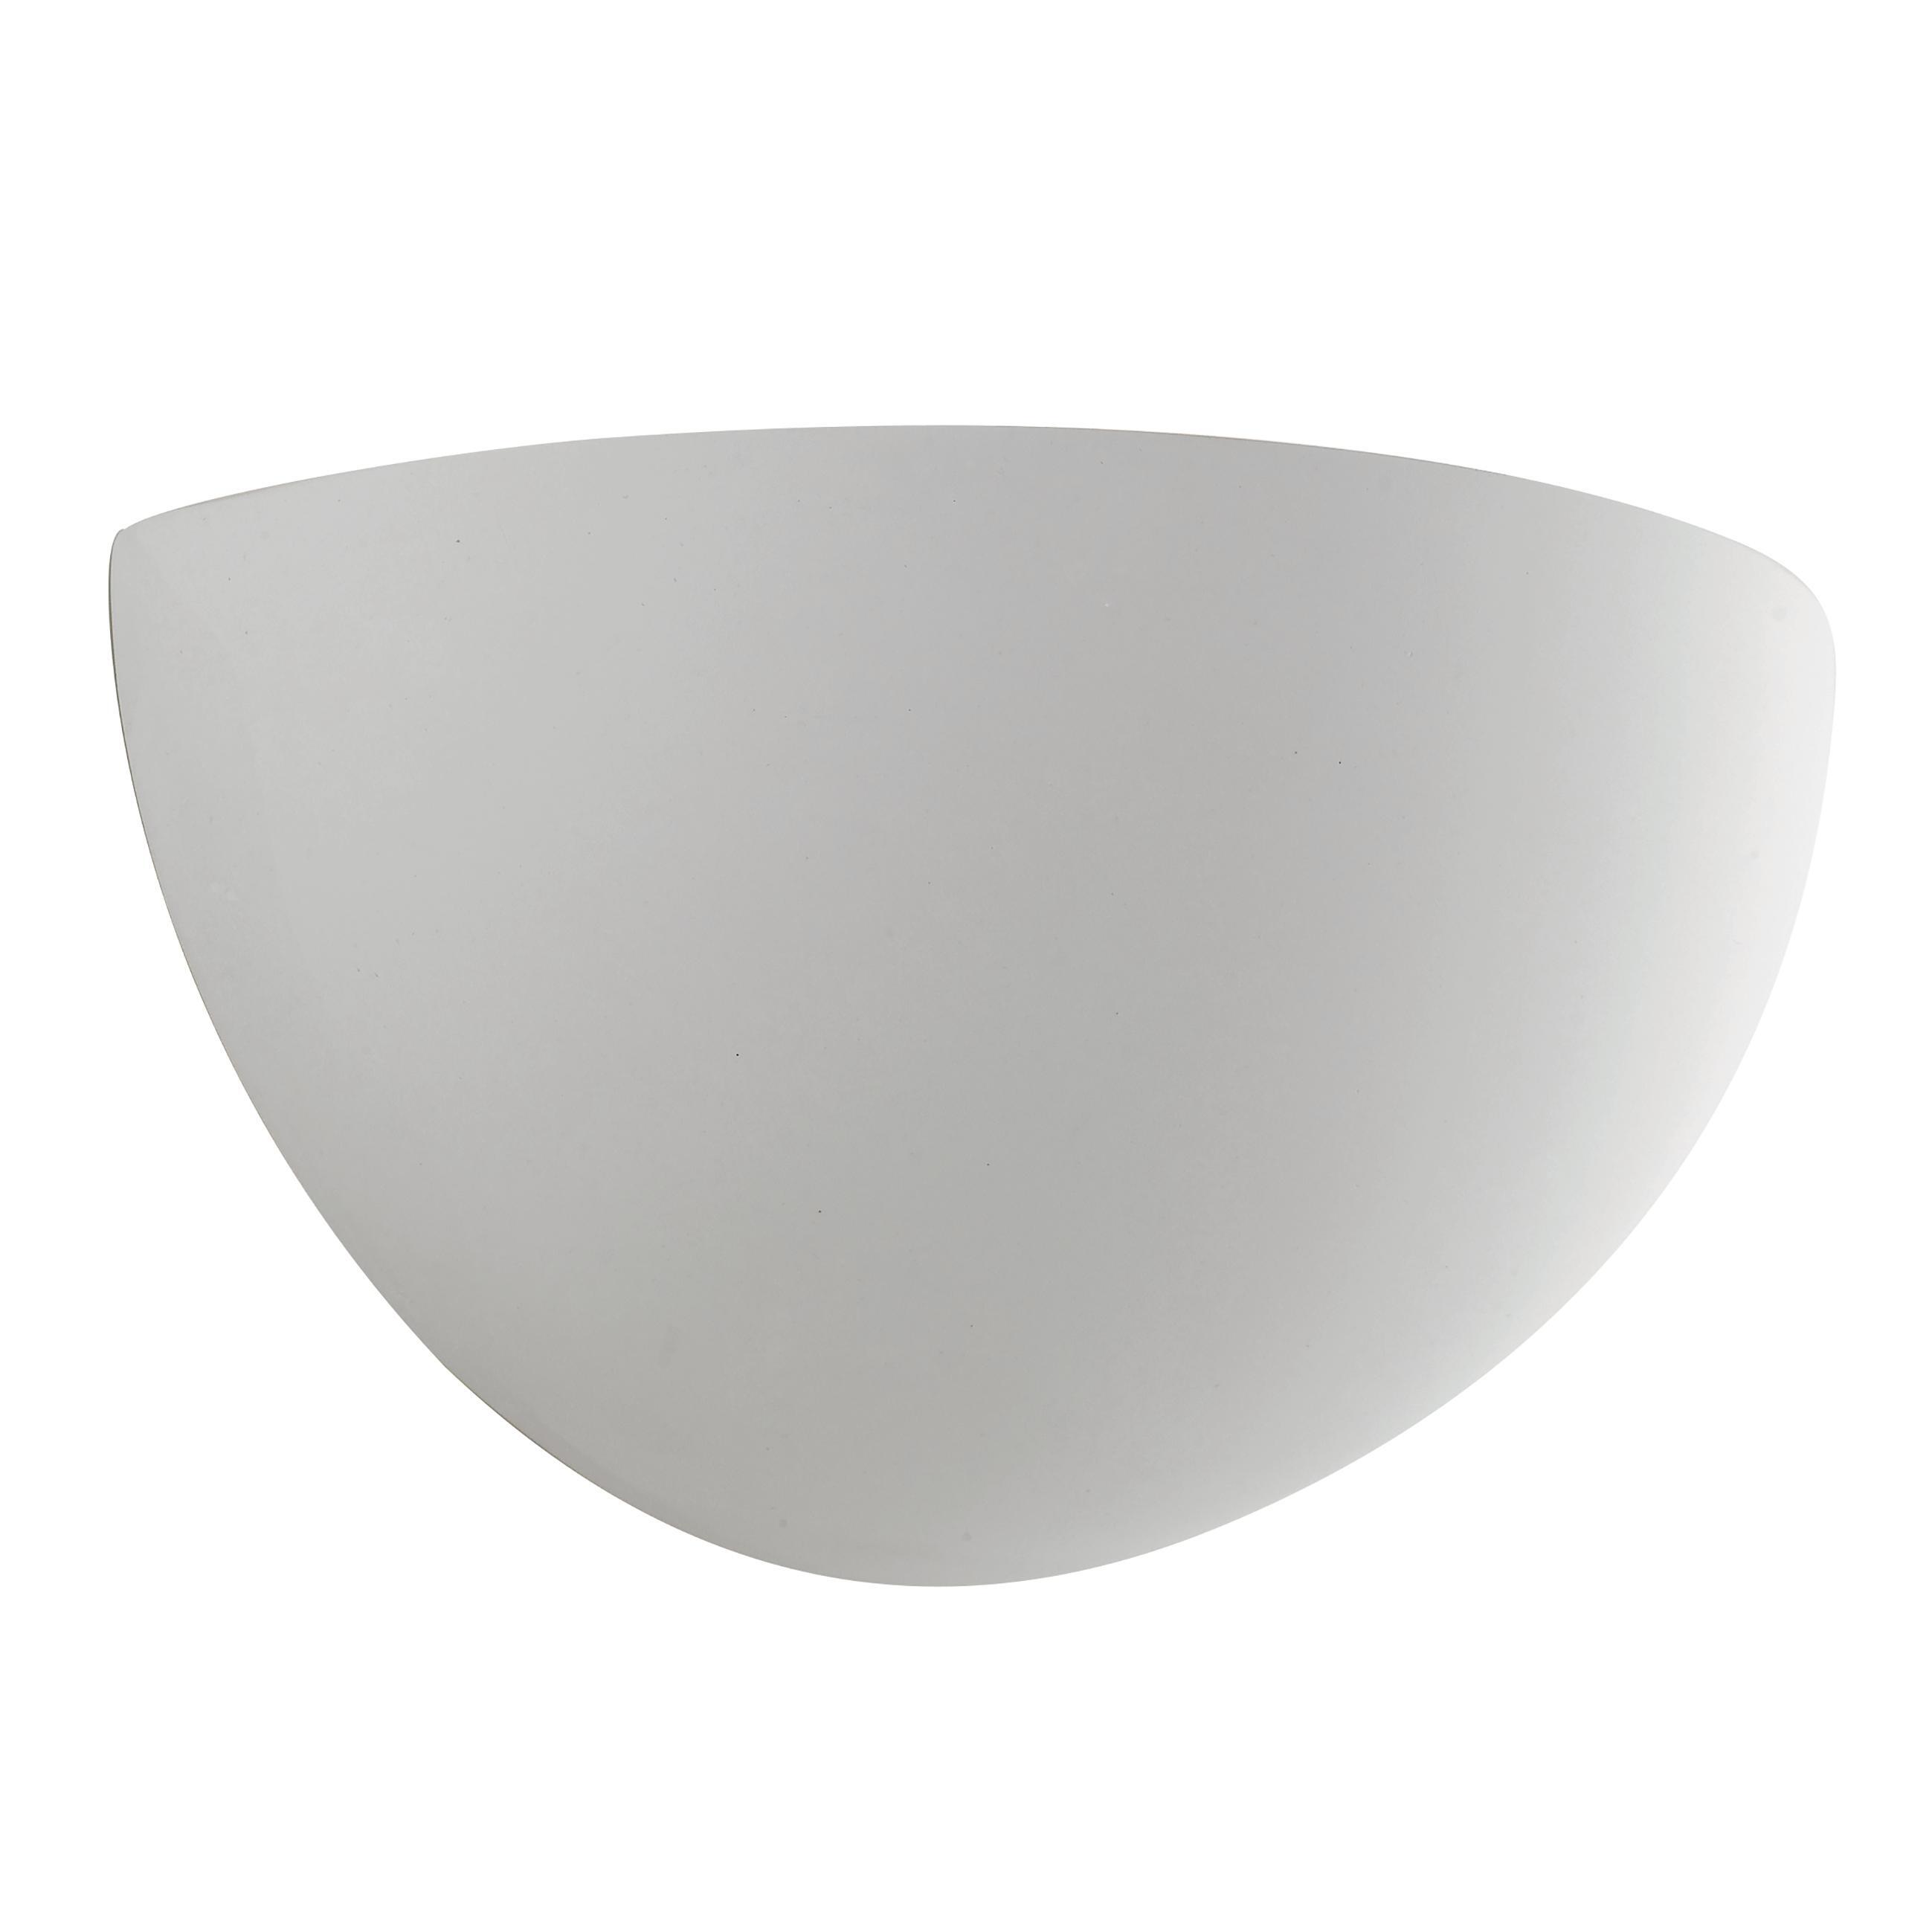 Applique design gesso Moritz-s bianco verniciabile, in calcestruzzo, 9.5 x 25 cm, INTEC - 2